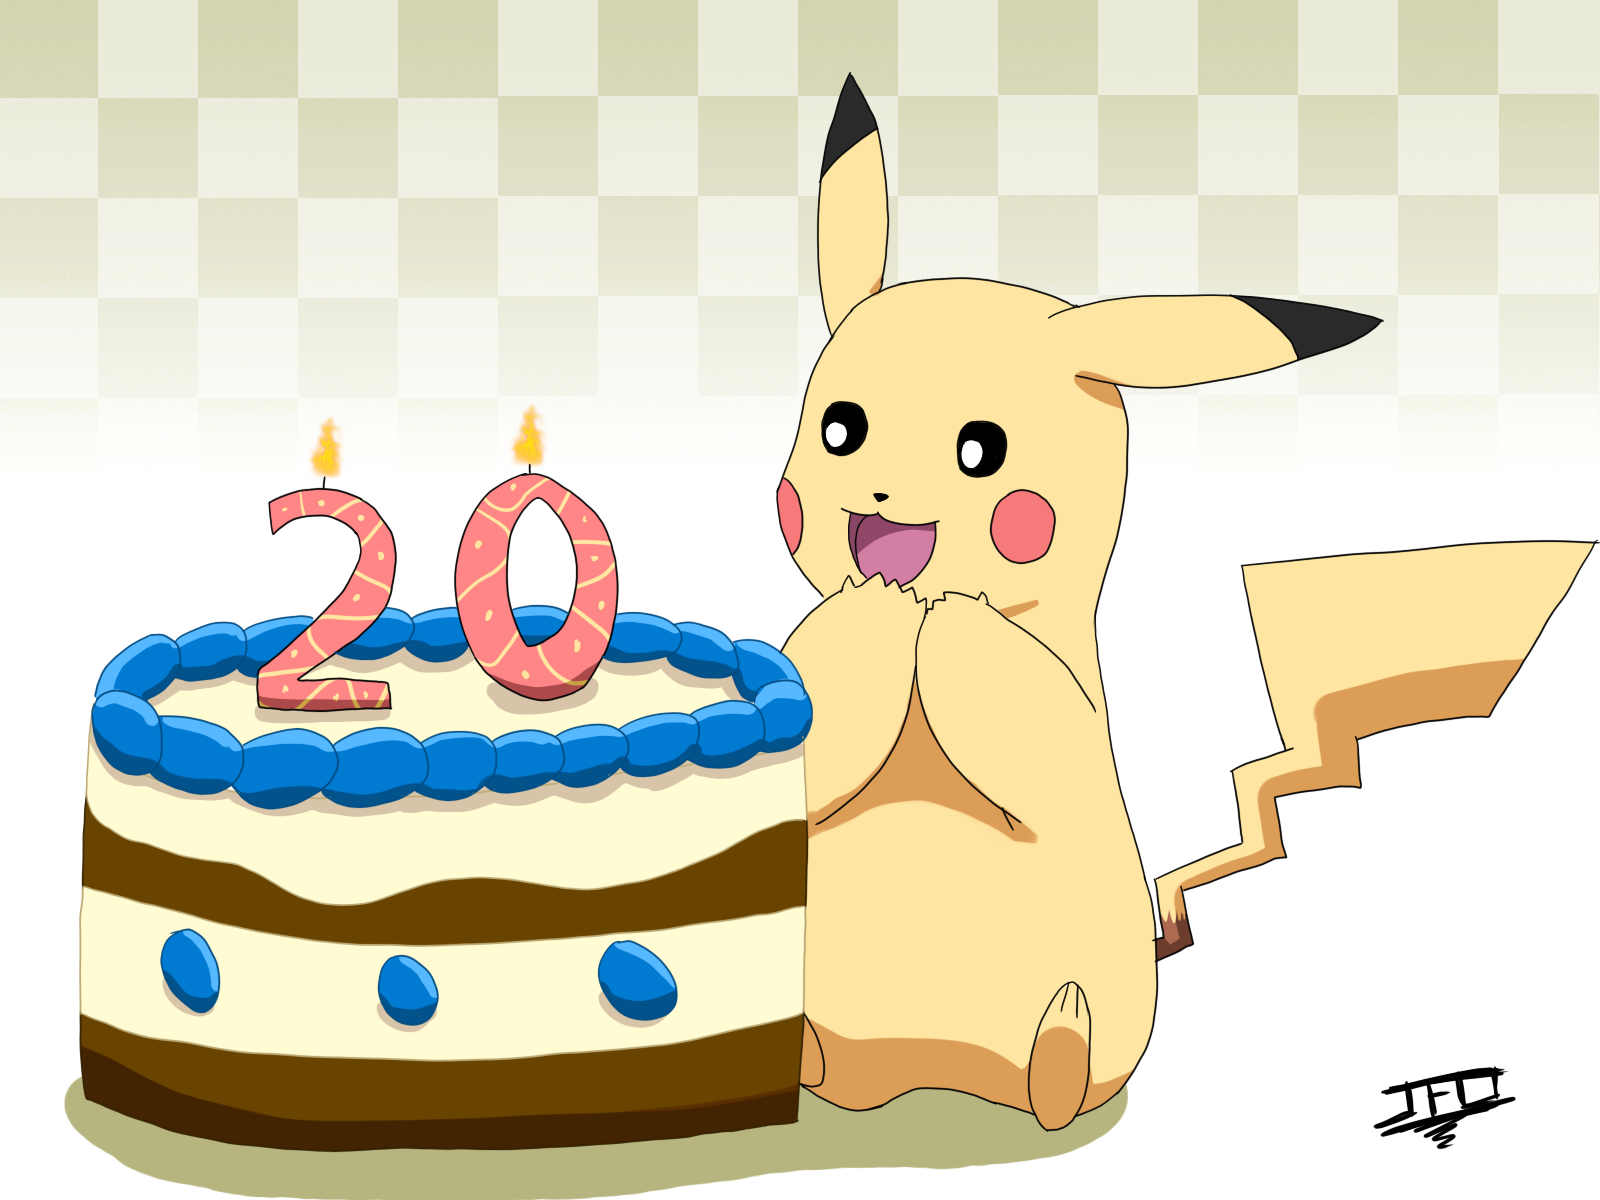 Happy Birthday Pokemon xyz by Pikarinaa on DeviantArt